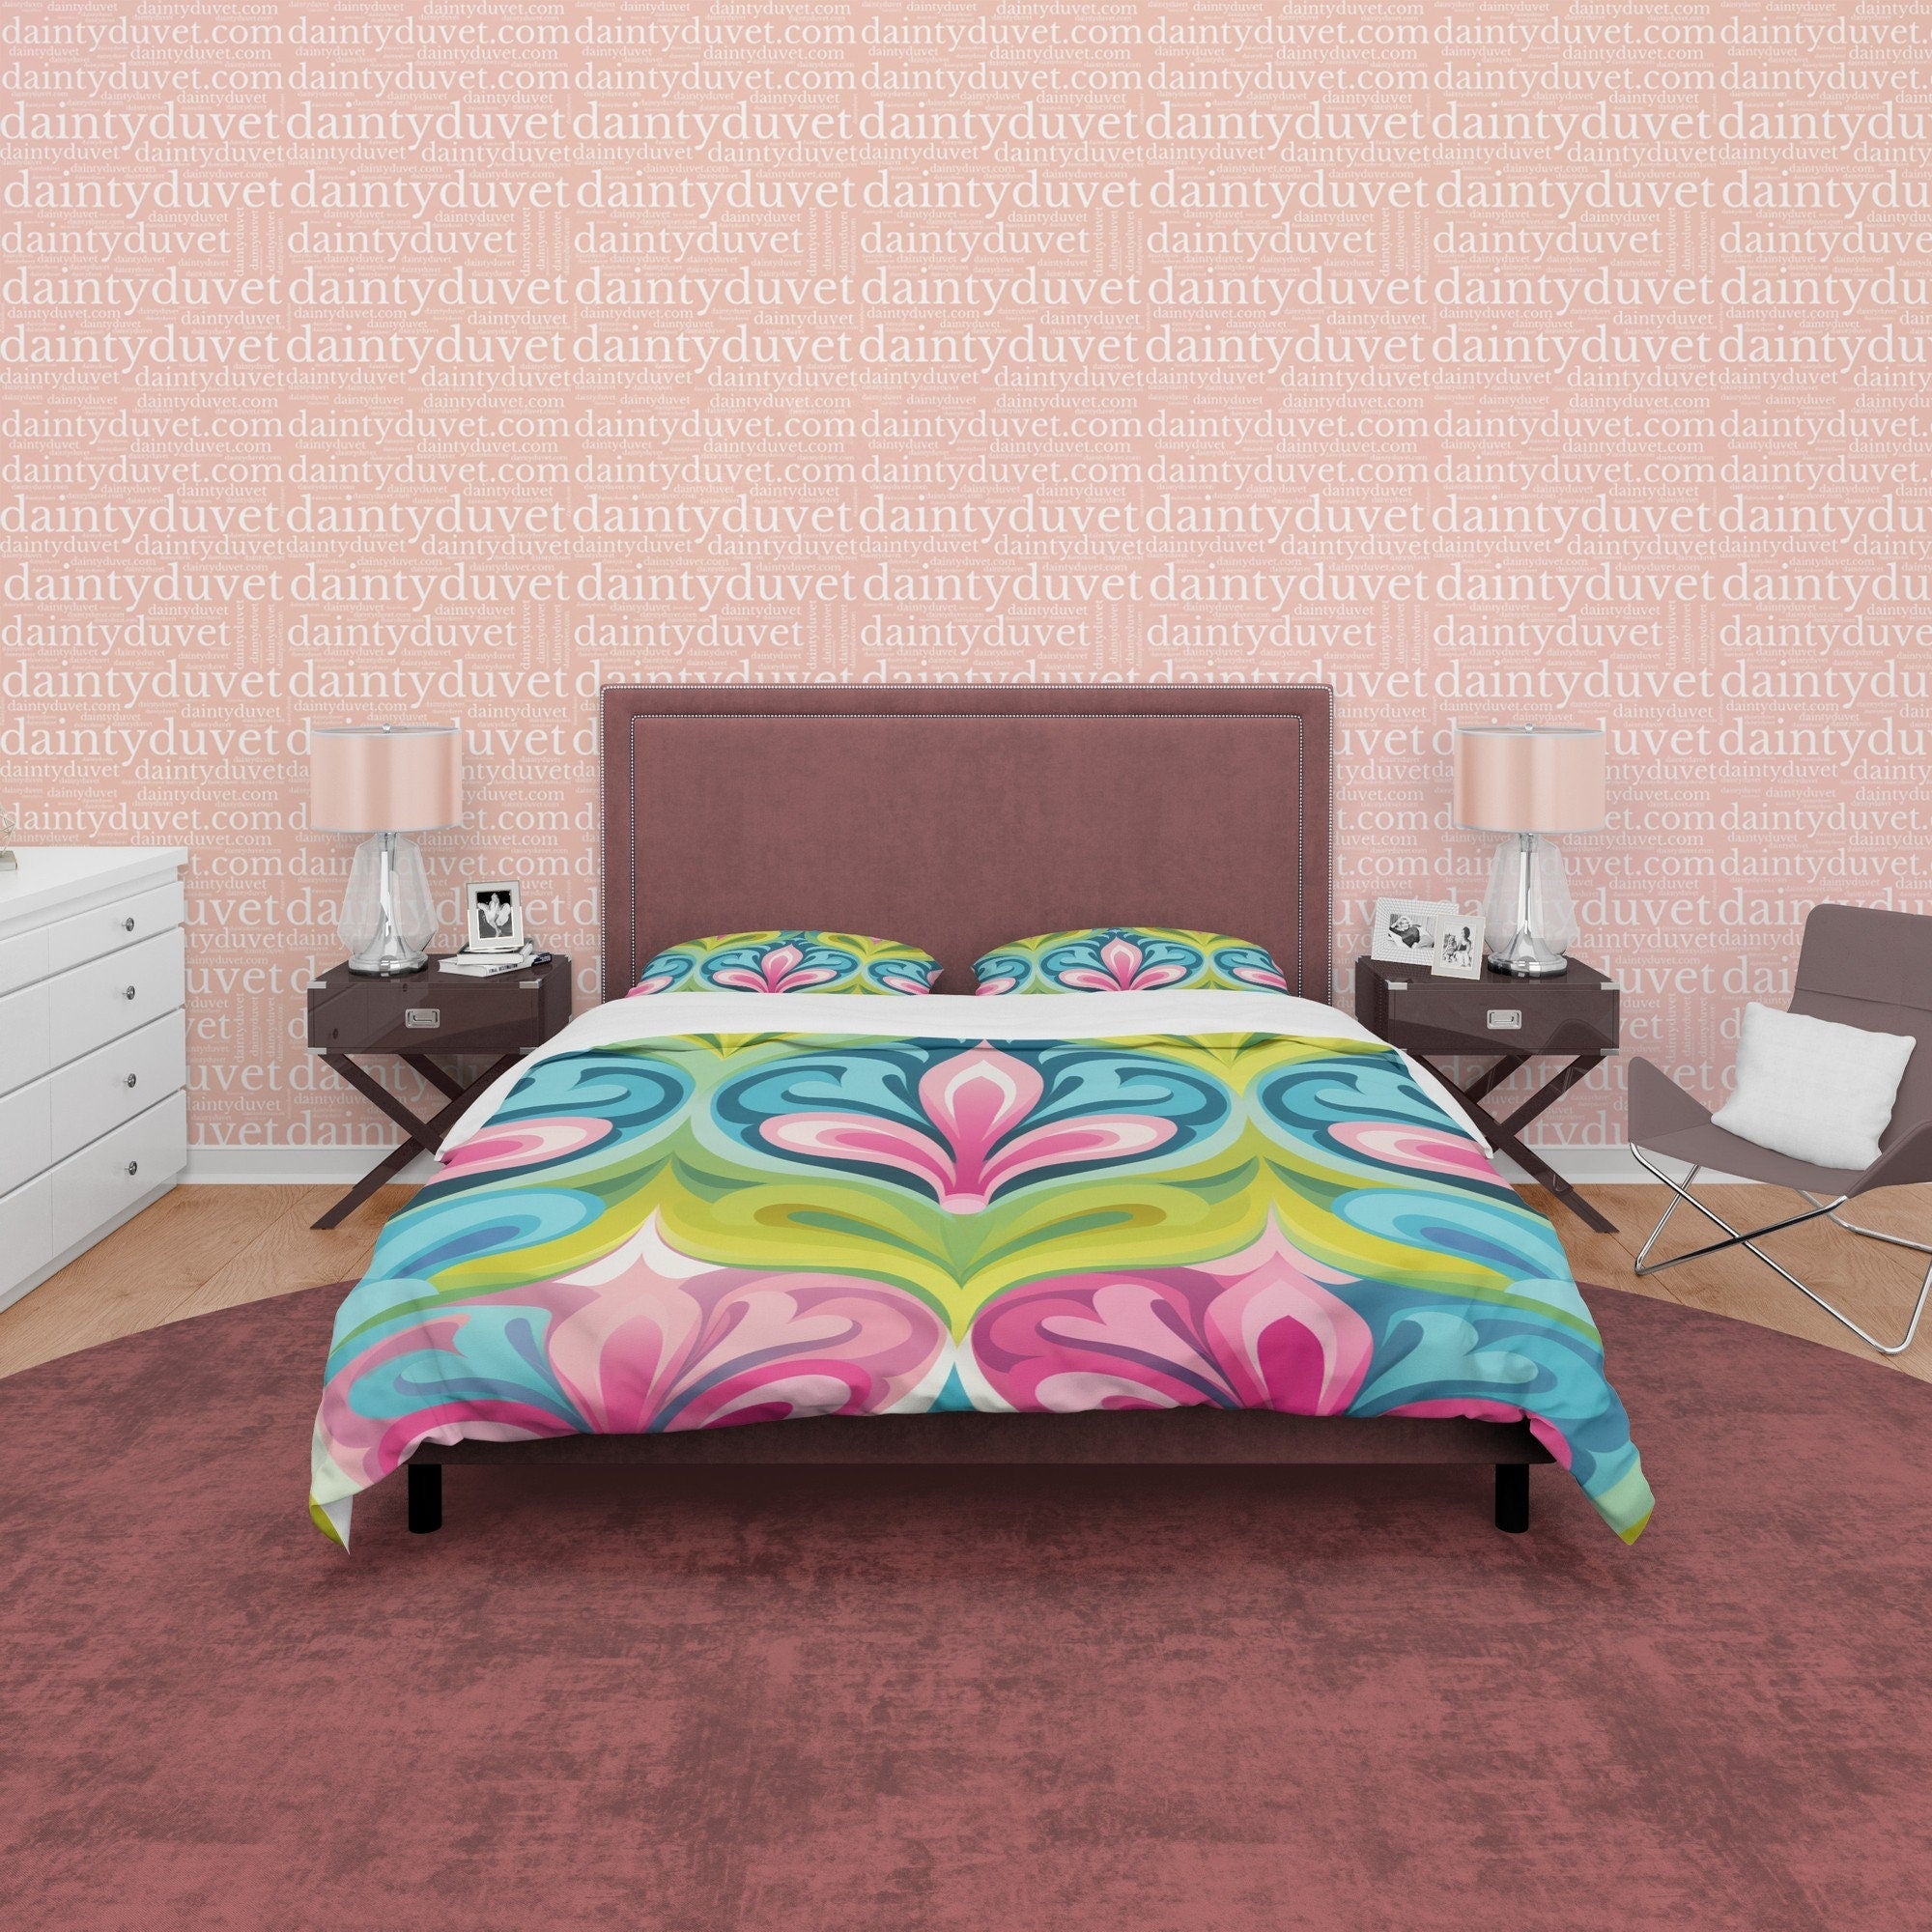 Boho Bedding Colorful Duvet Cover Bohemian Bedroom Set, Floral Quilt Cover, Aesthetic Bedspread, Tropic Bright Color Unique Room Decor